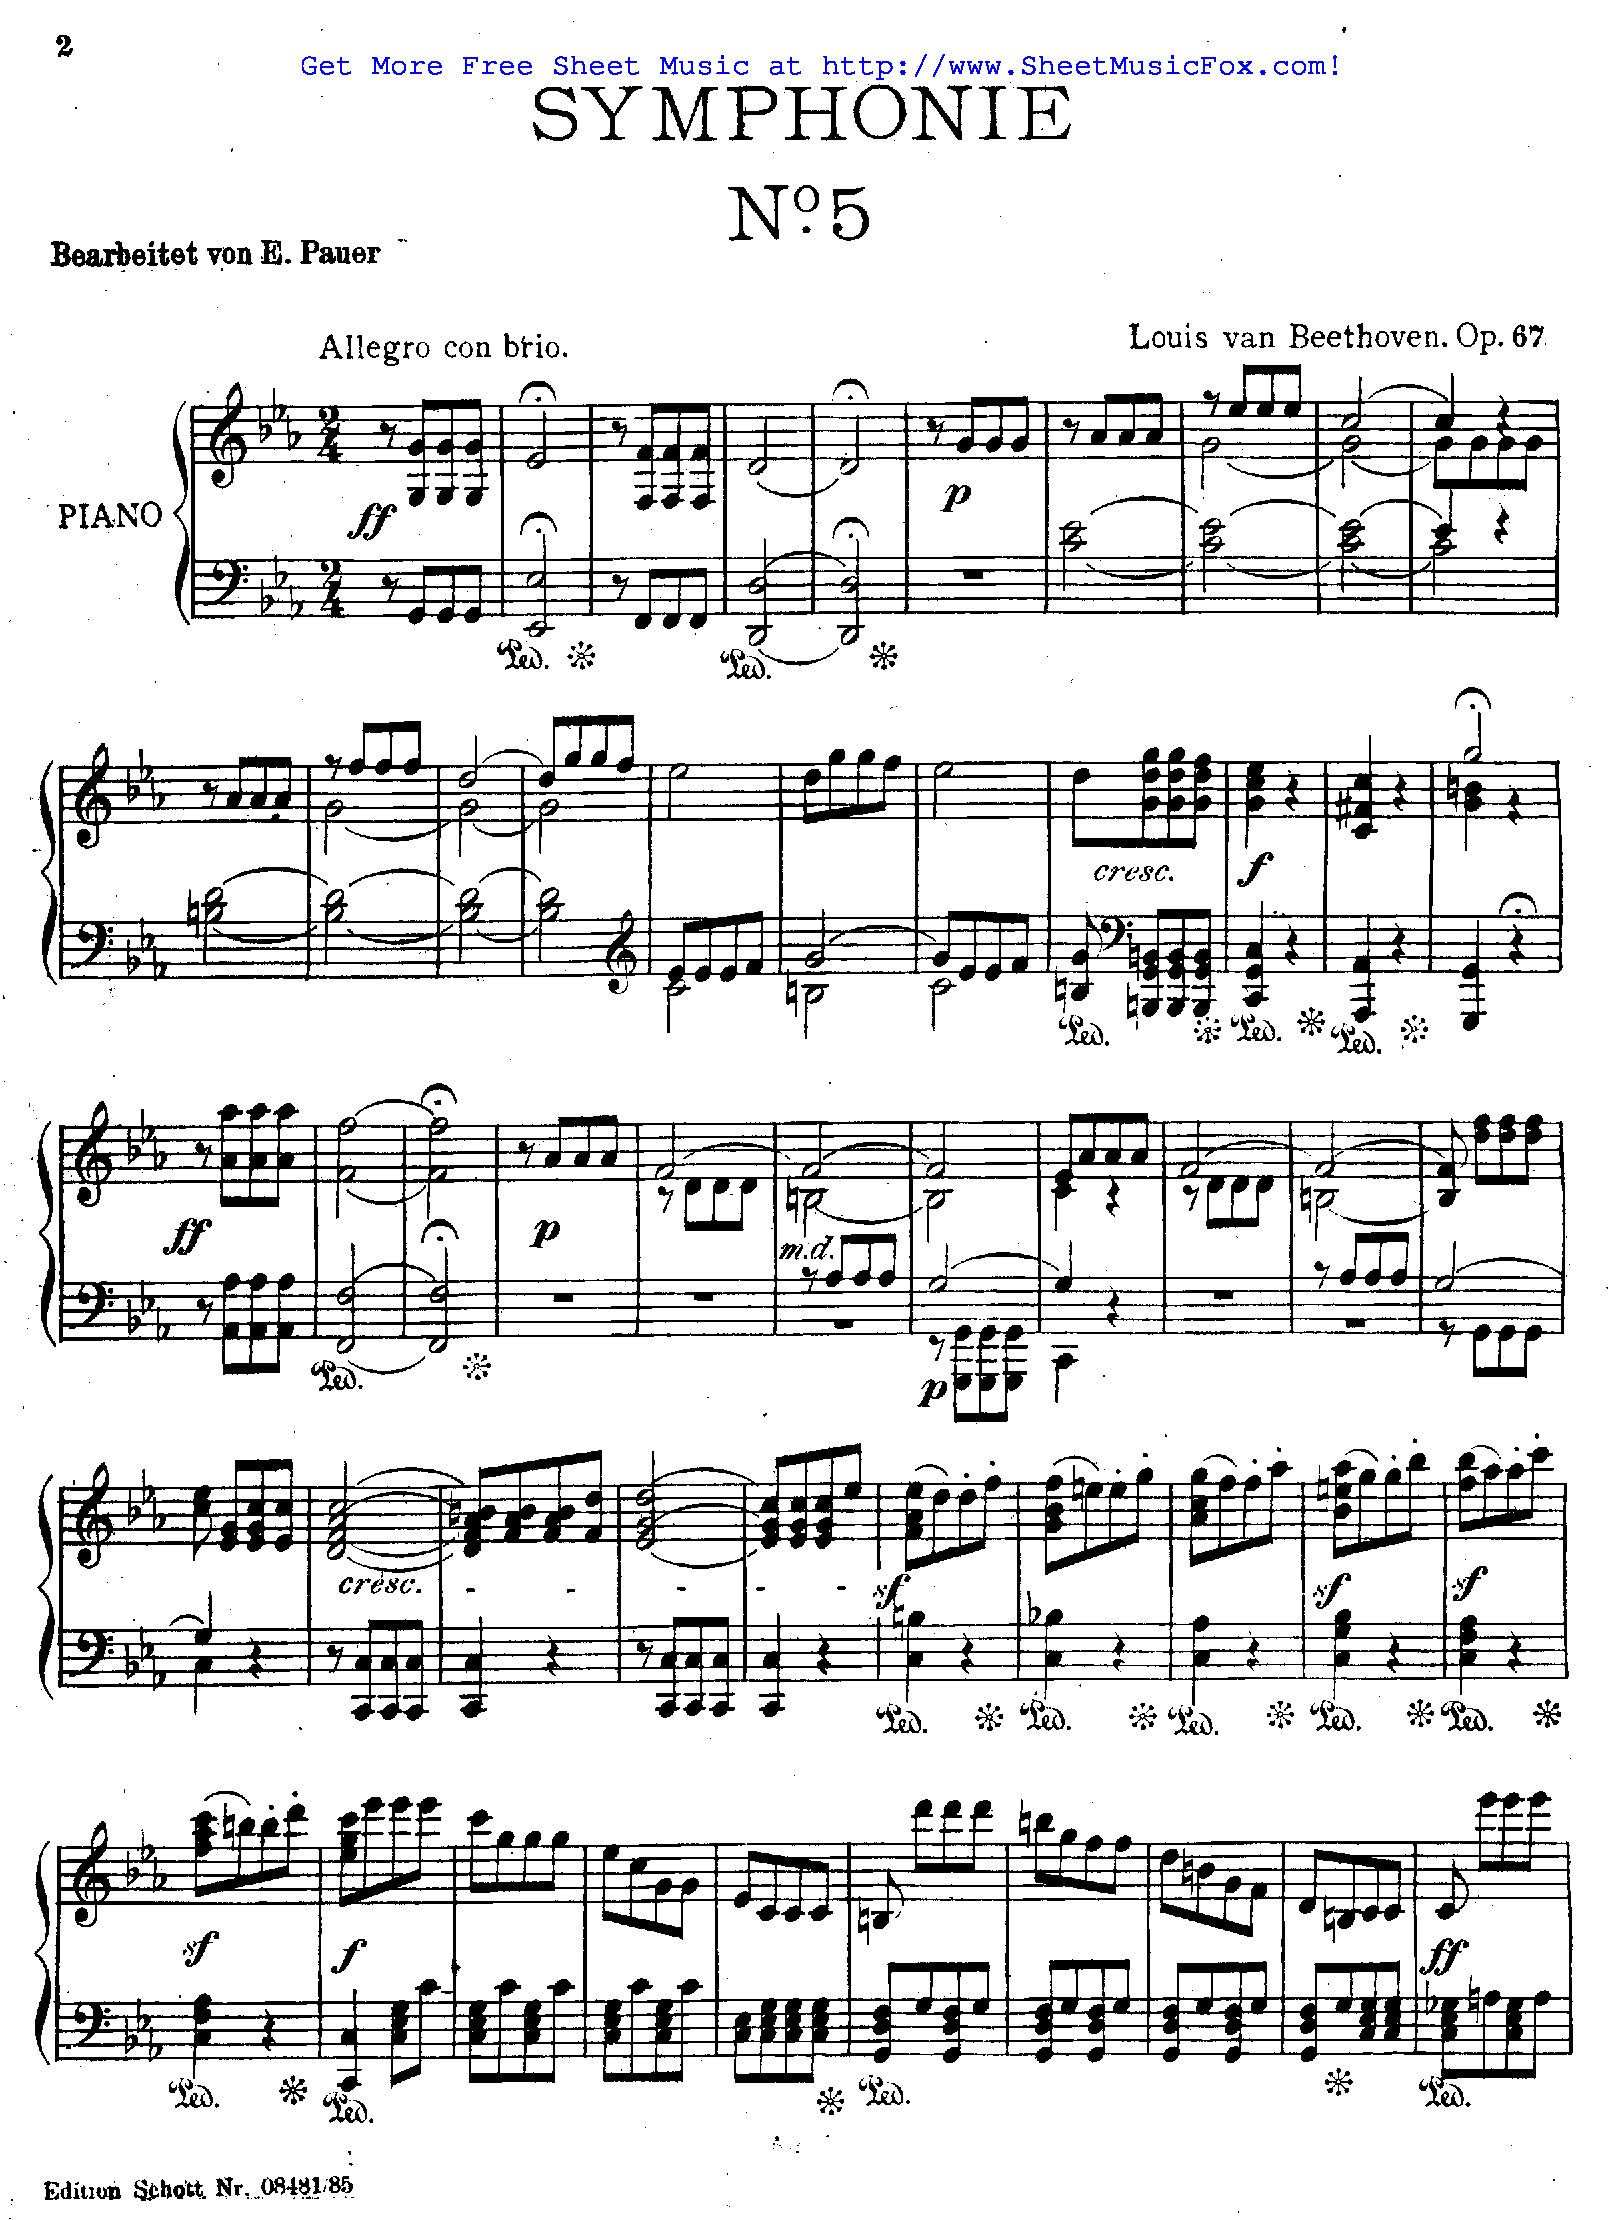 Symphony No.5, Op.67 (Beethoven, Ludwig van) sheet music.